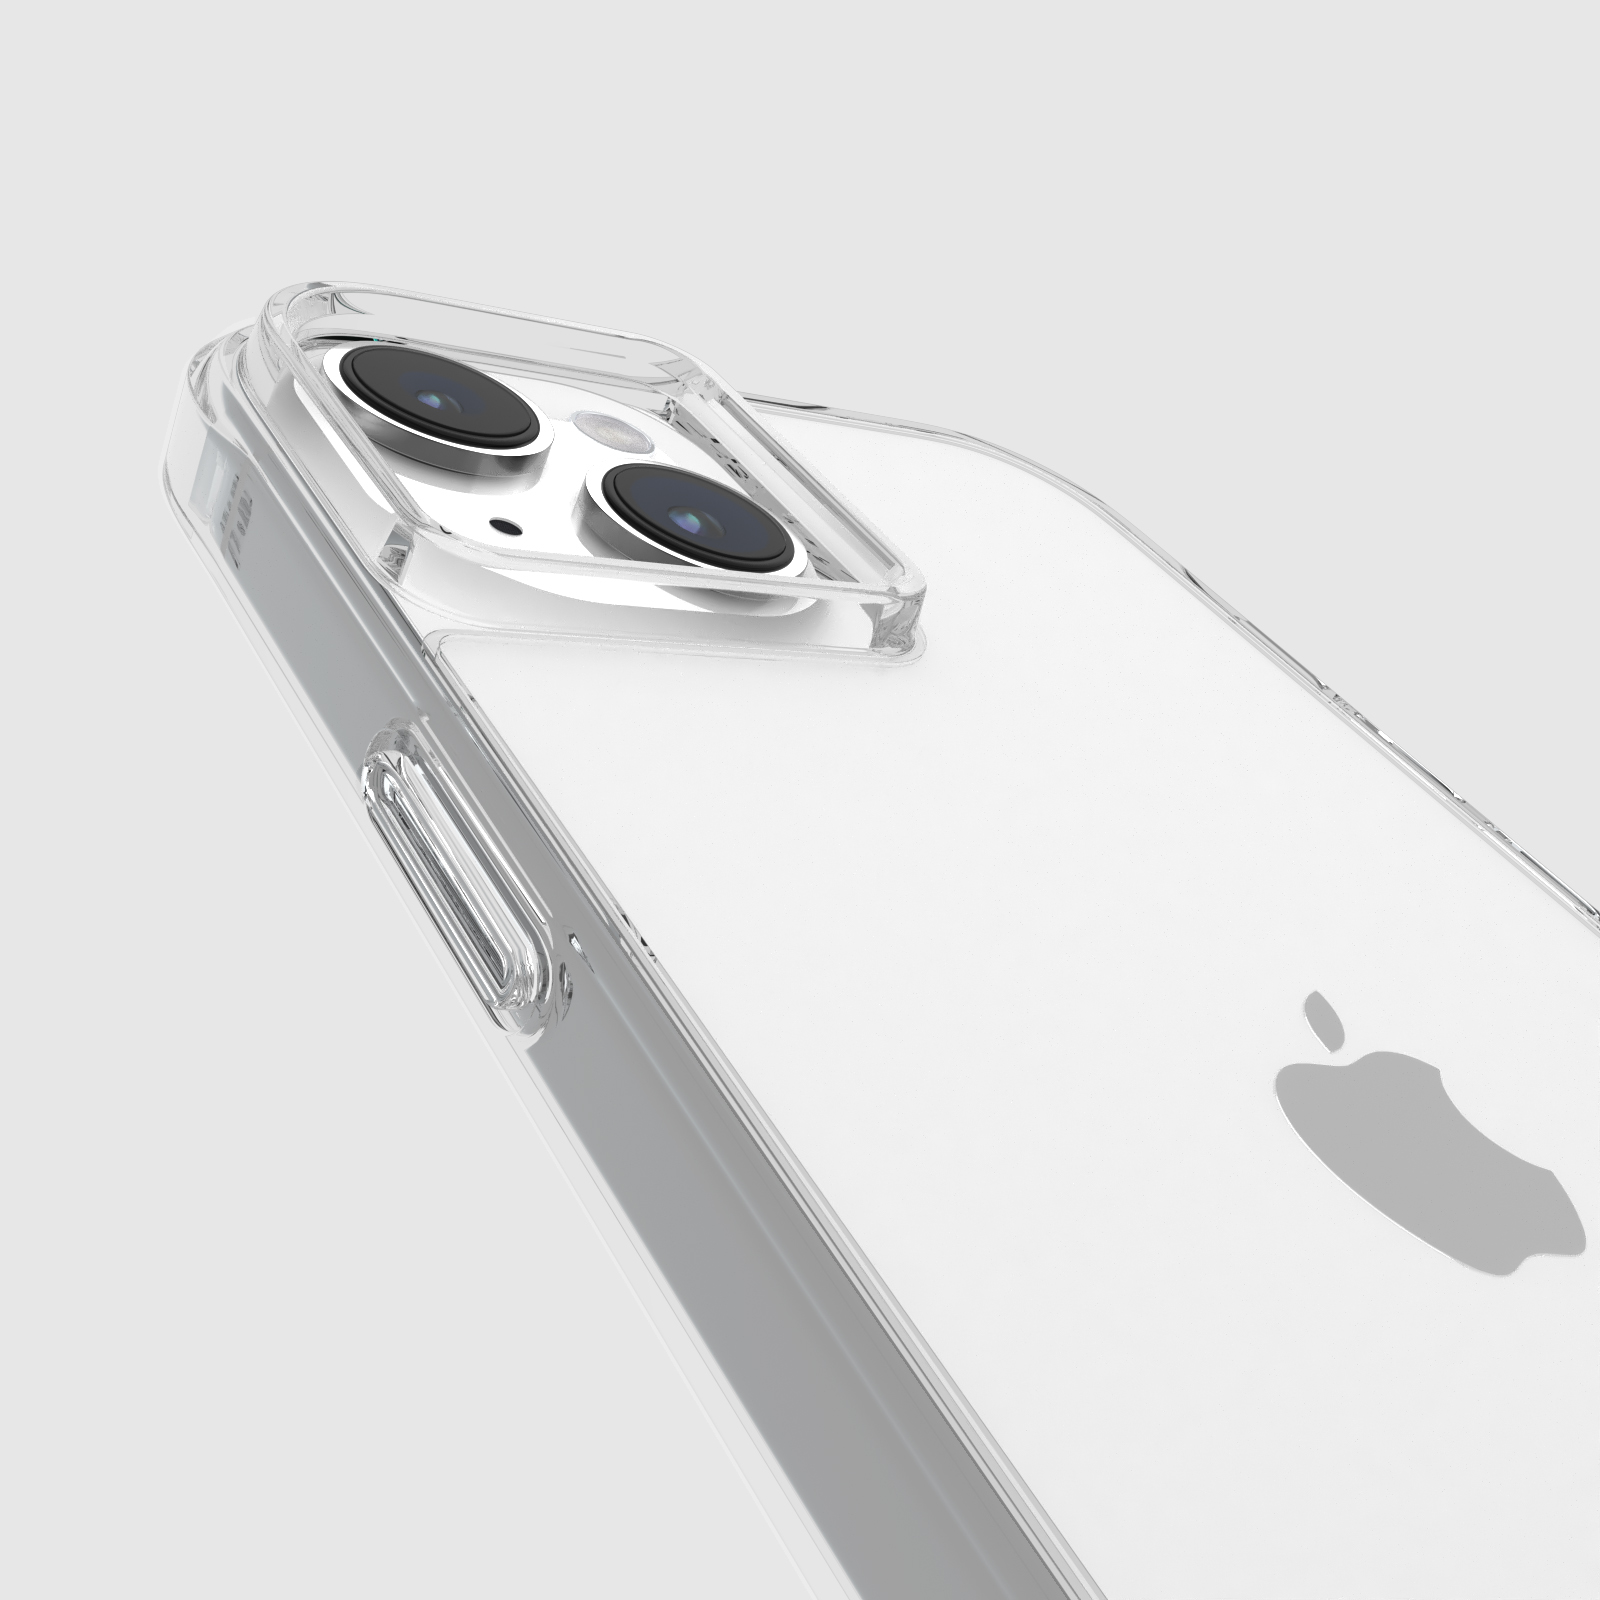 CASE-MATE Tough Clear, Apple, iPhone Backcover, Transparent 15 Plus